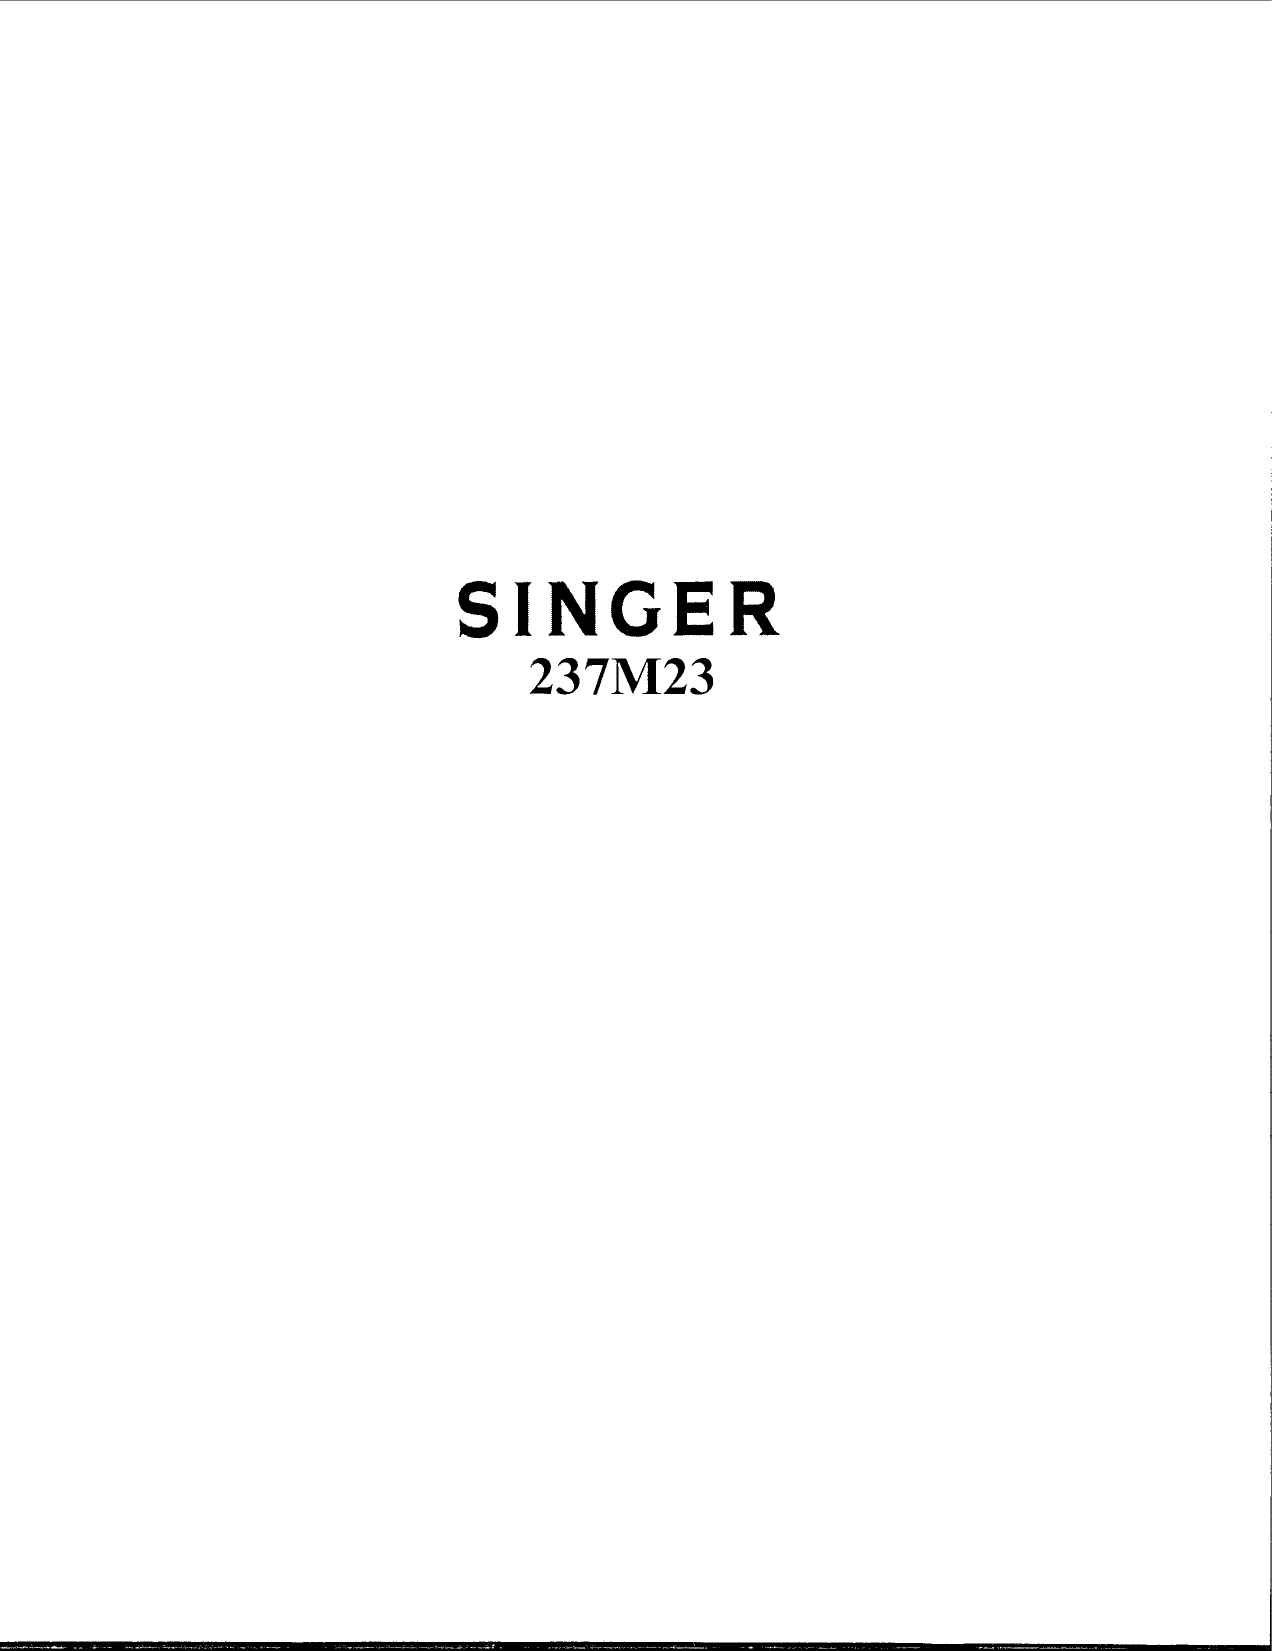 Page 1 of 5 - Singer Singer-237M23-Users-Manual-  Singer-237m23-users-manual